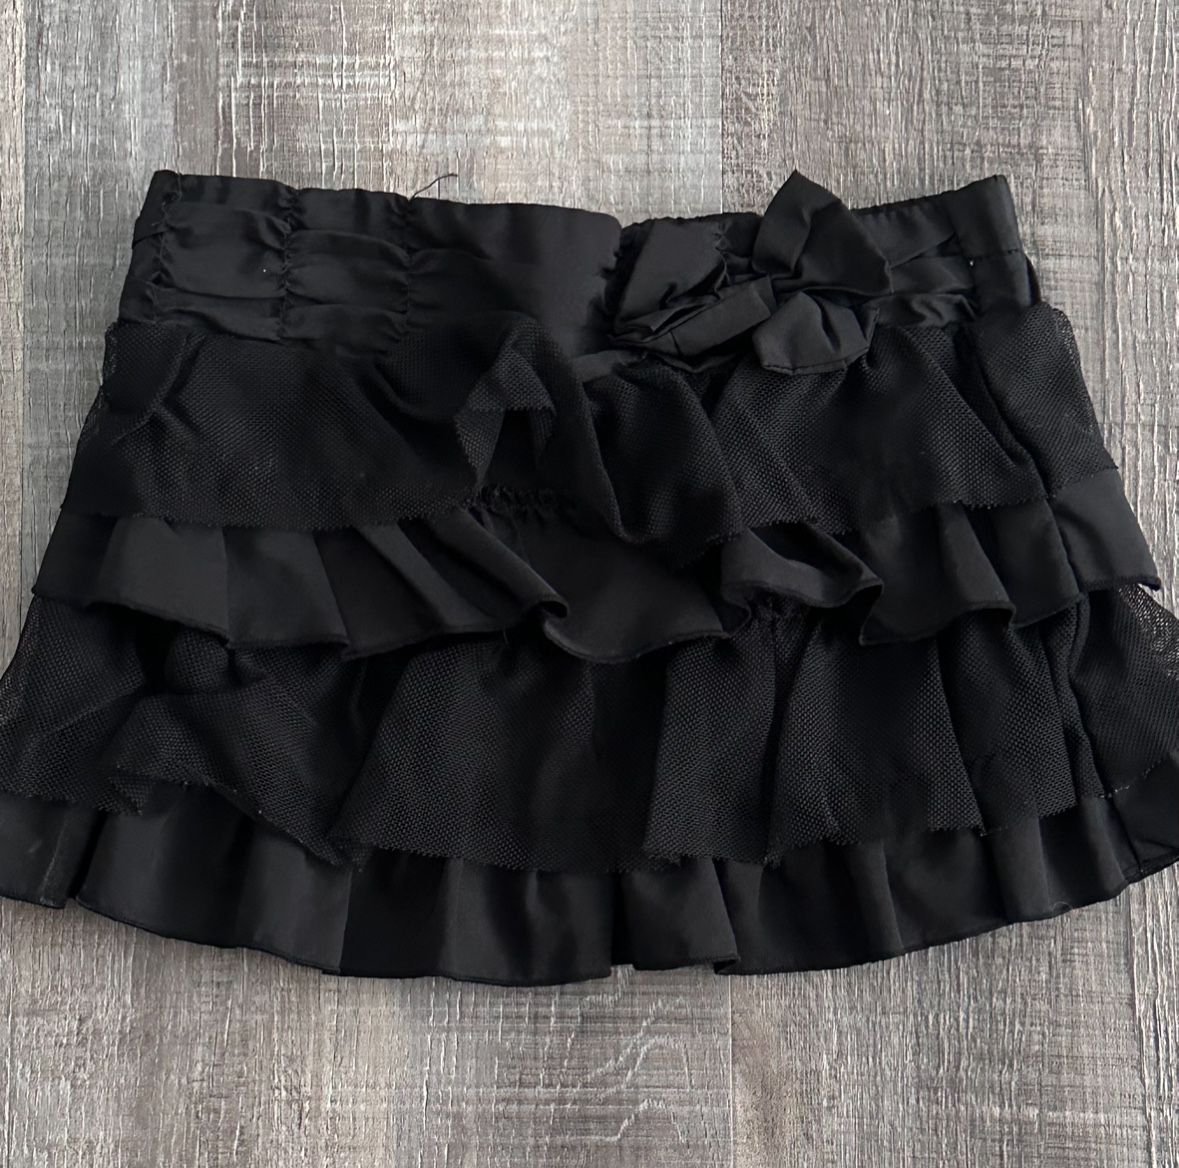 Baby Girls Size 18 Months Black 4-Layer Ruffled Skirt